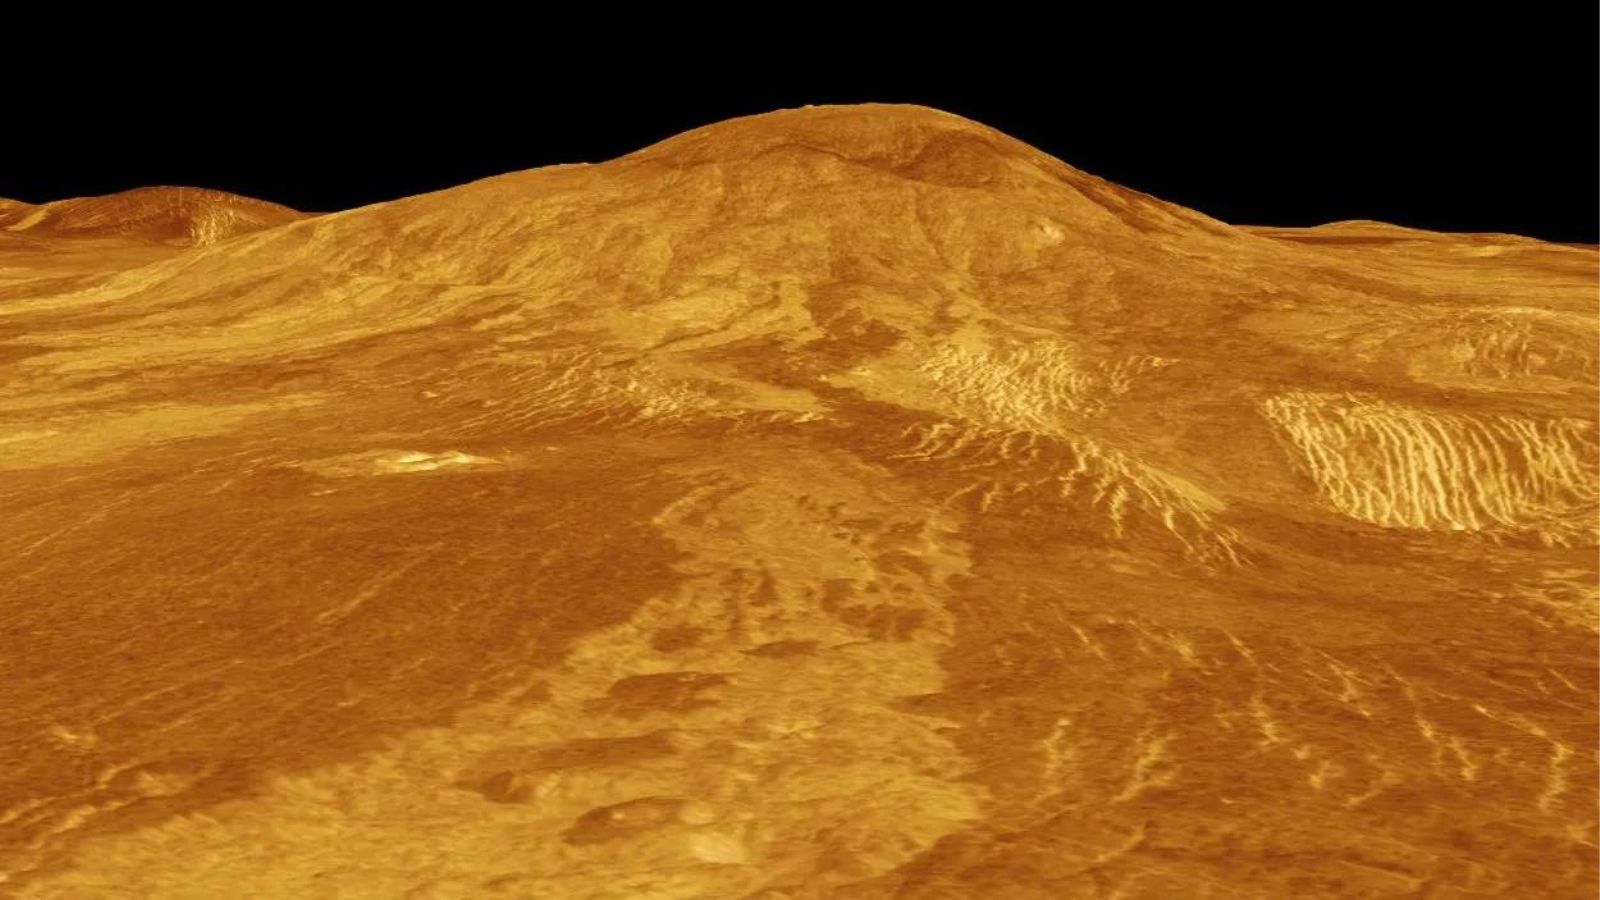 Technology News: NASA’s Magellan radar reveals potential ongoing volcanic activity on Venus